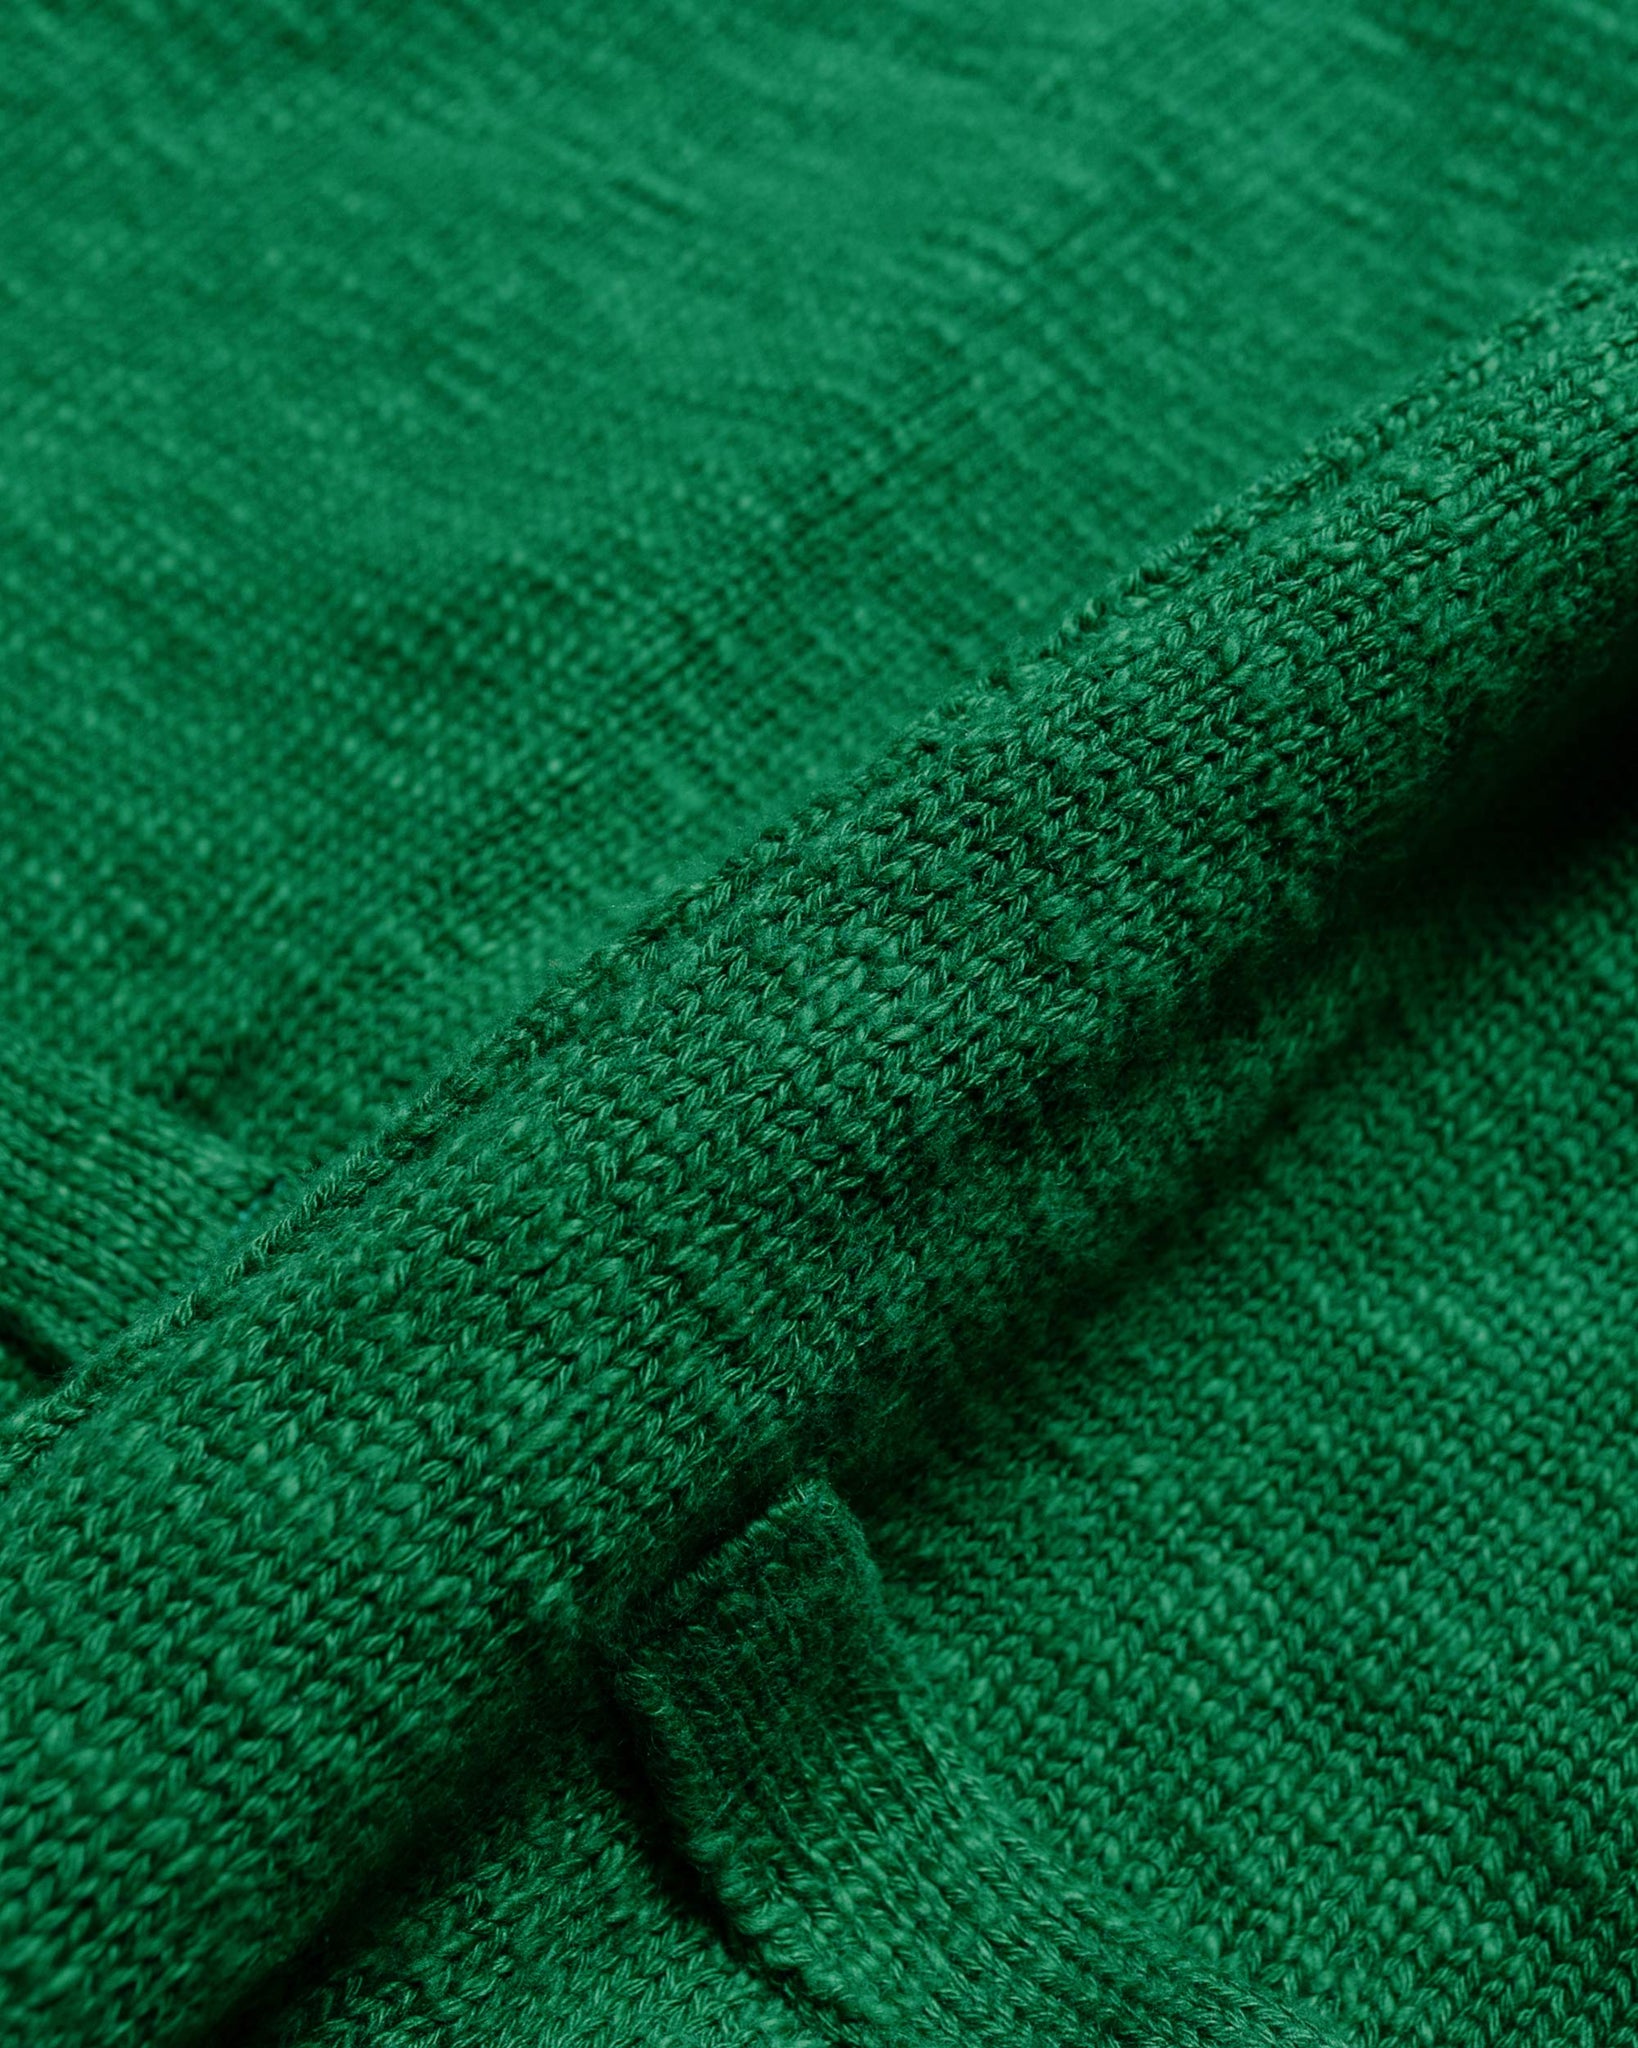 The Real McCoy's MC24016 Cotton Summer Cardigan Green fabric